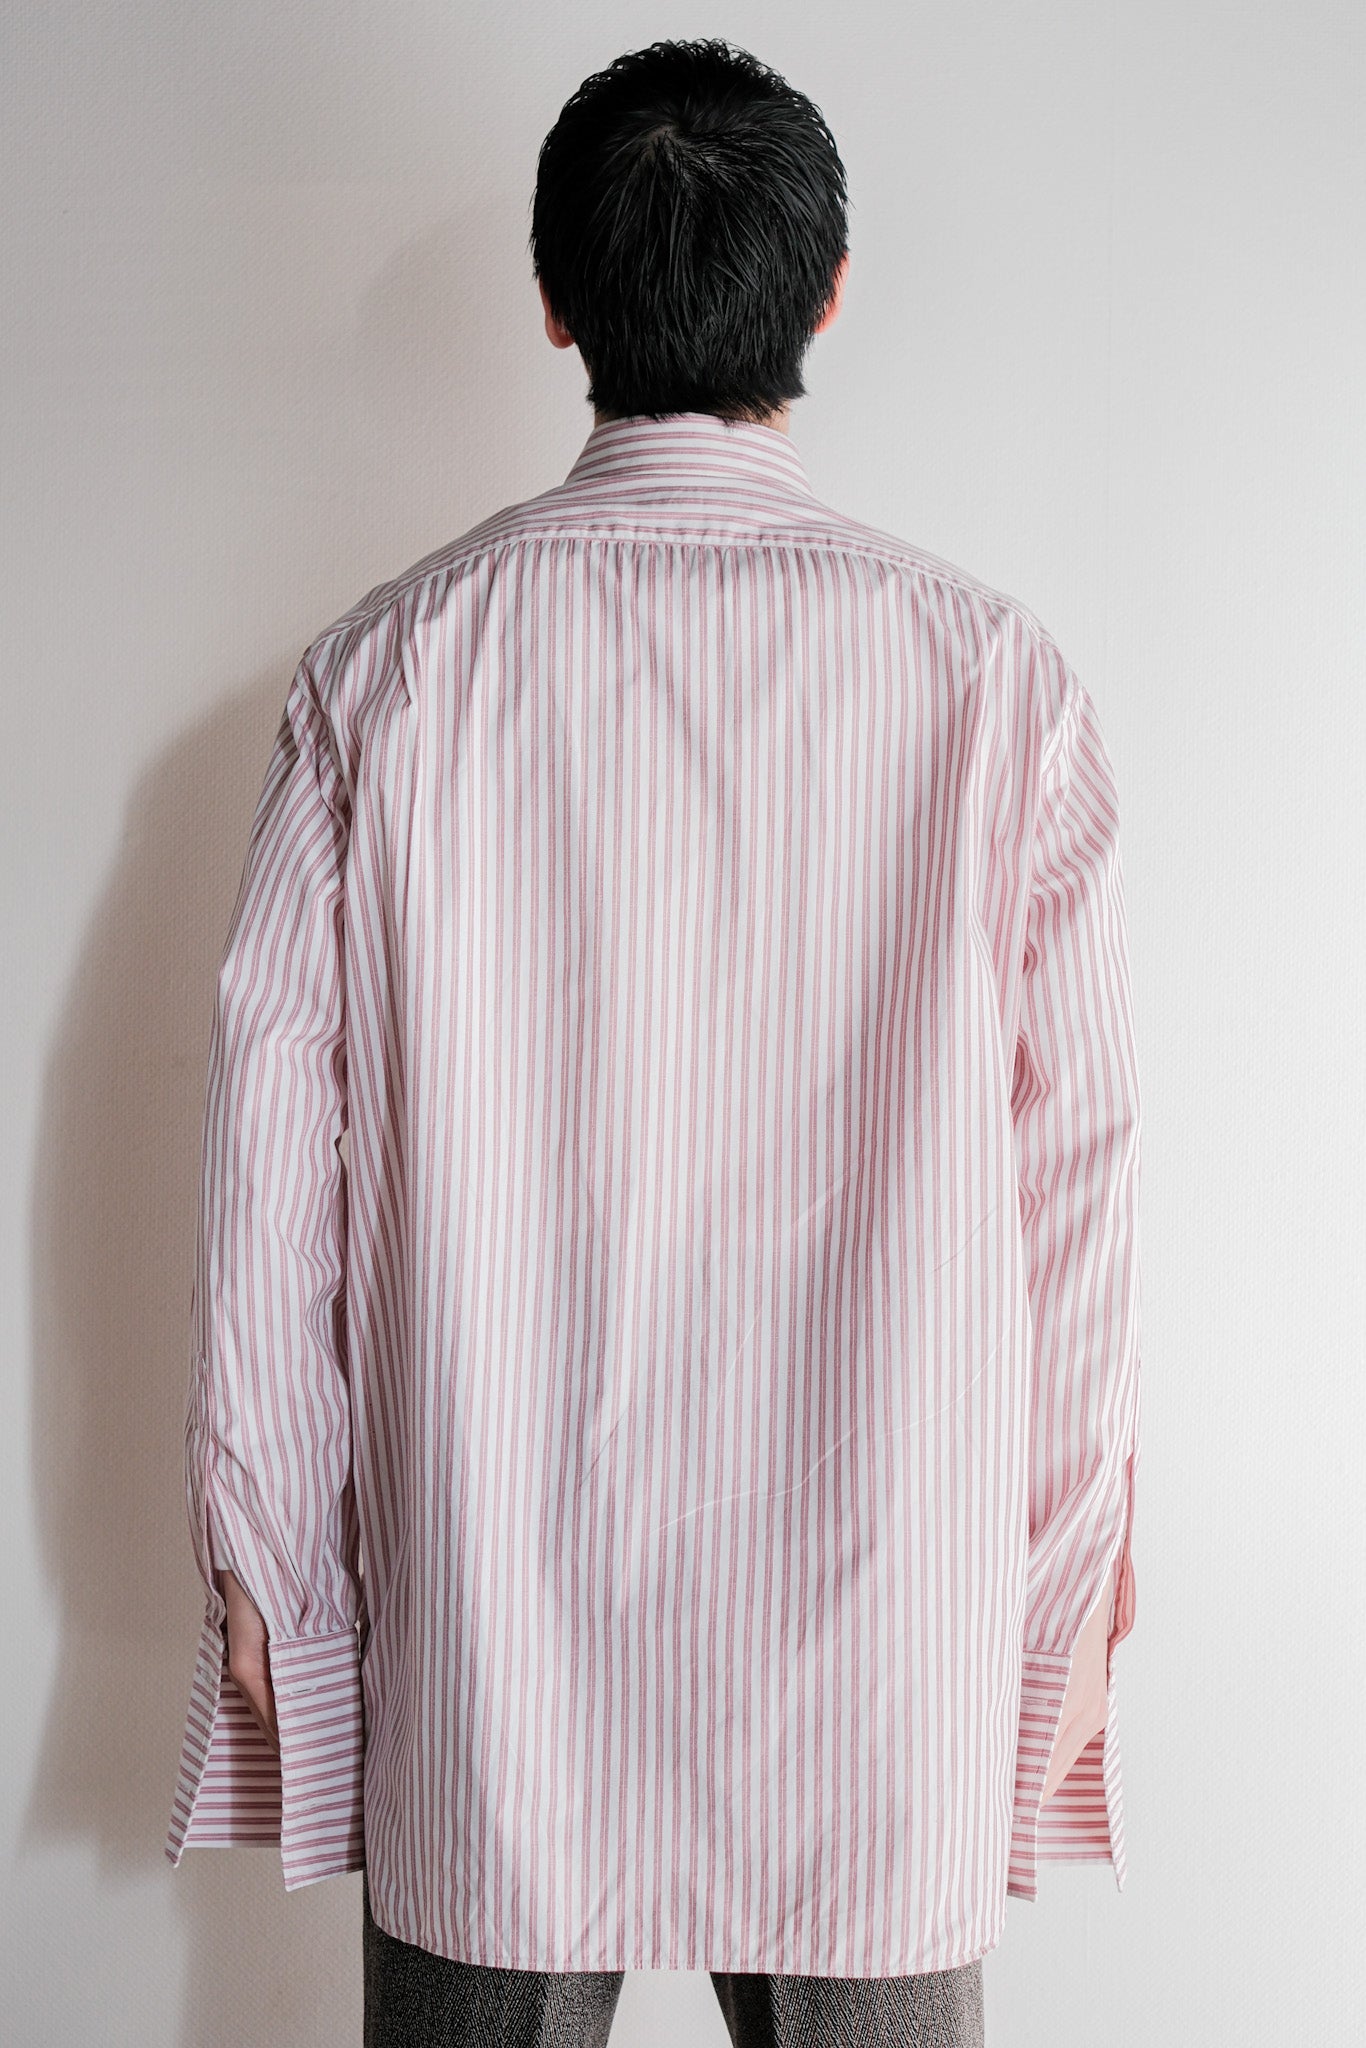 【~00's】Old ARNYS PARIS Cotton Striped Dress Shirt Size.41